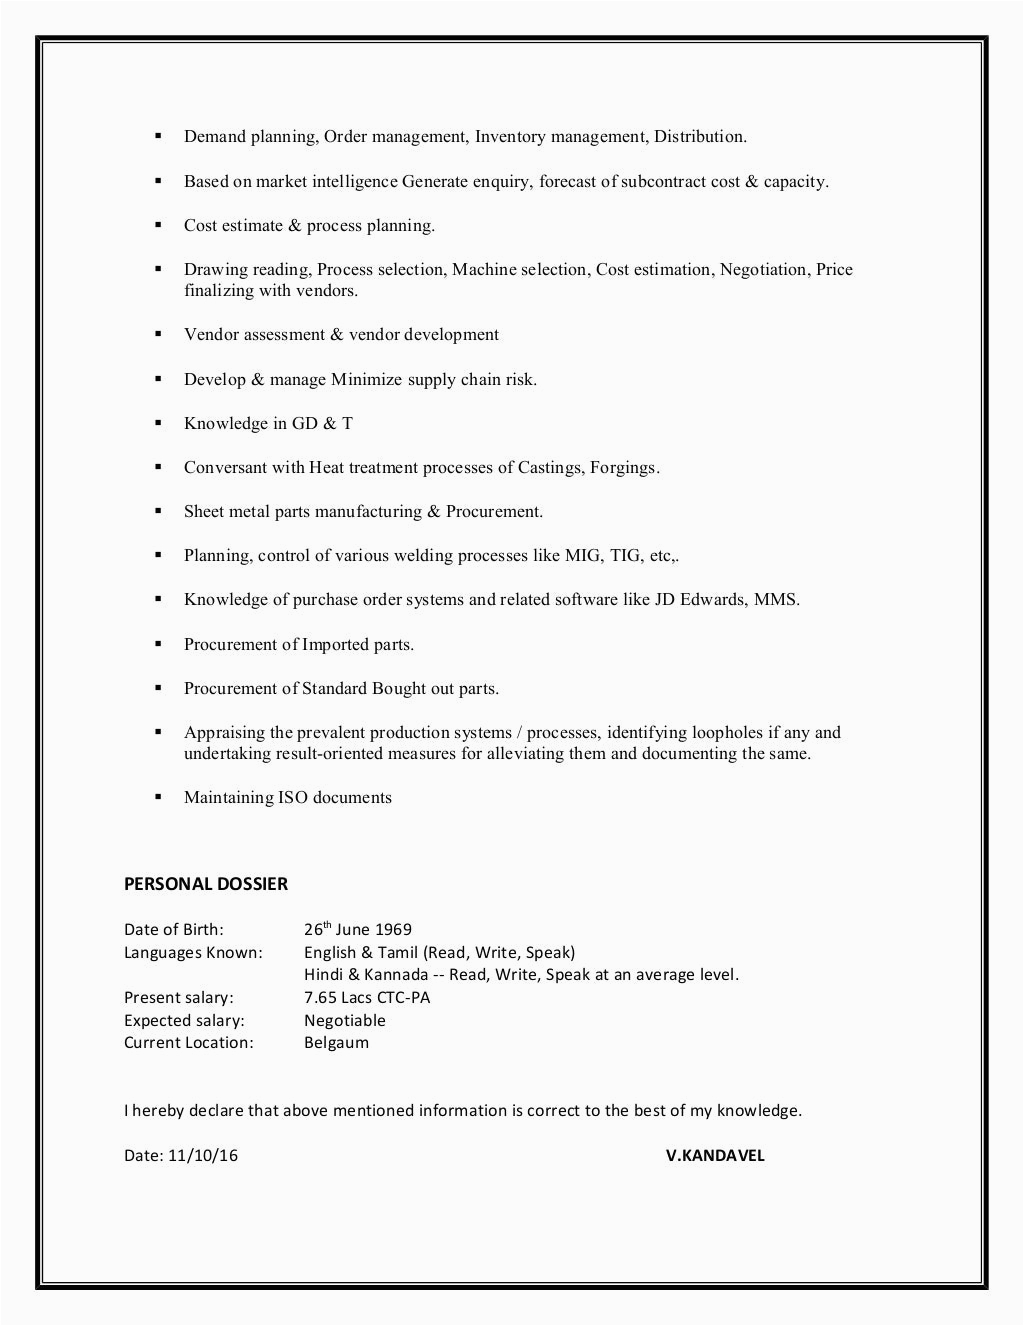 Sample Resume for Vendor Development Manager Kandavel Purchase & Vendor Development Manager Resume